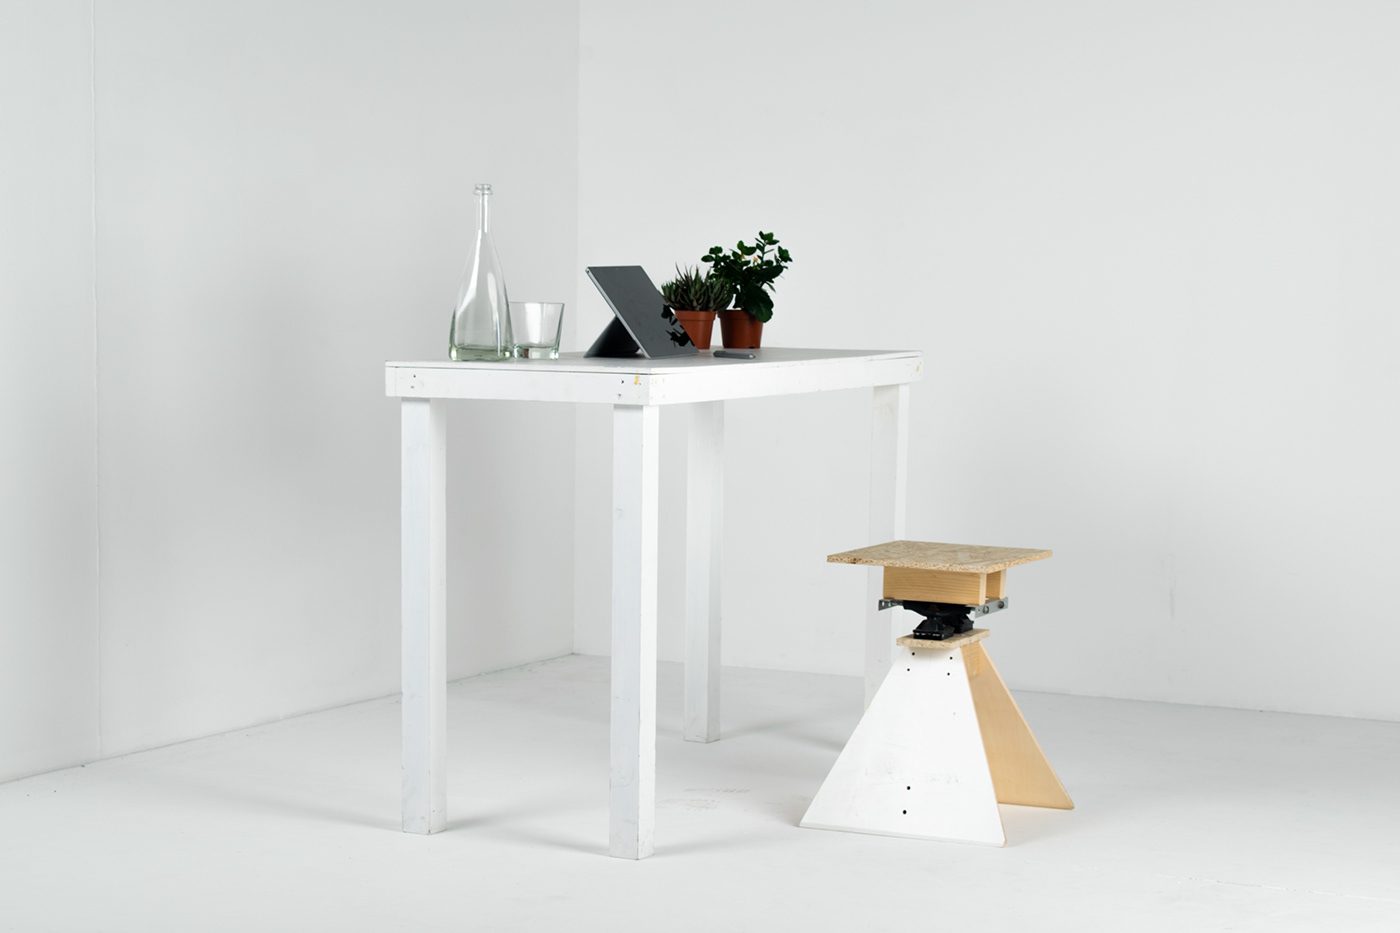 active sitting  furniture industrial design  magis plywood product design  Skating stool